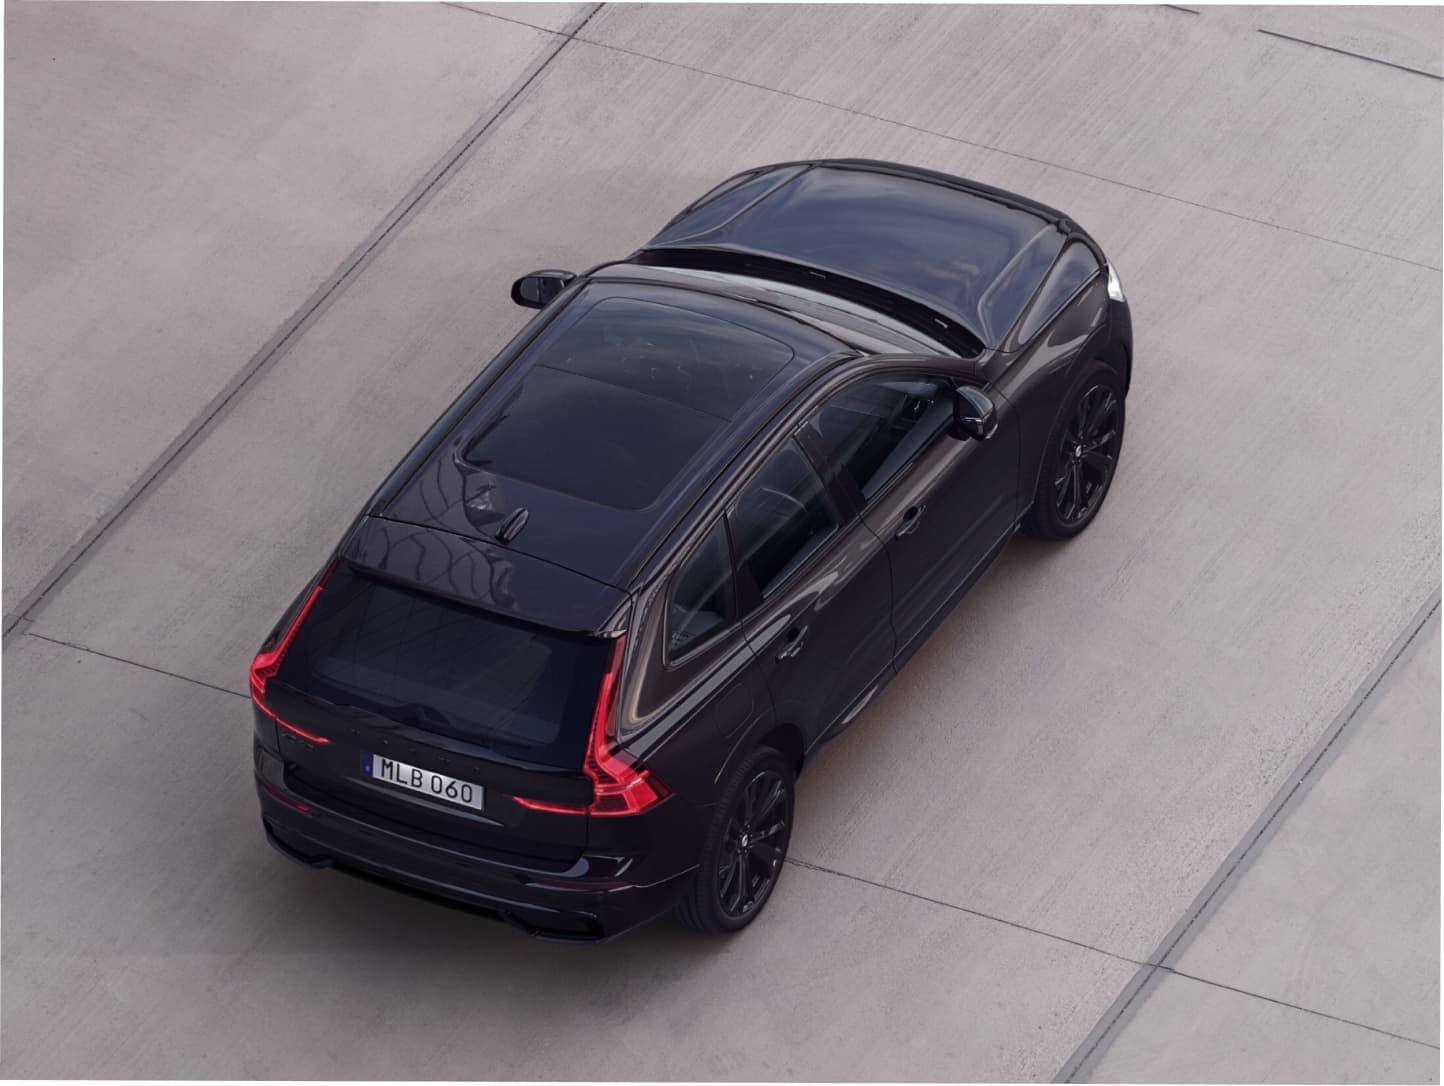 The Volvo XC60 Black Edition Mild hybrid driving outdoors.